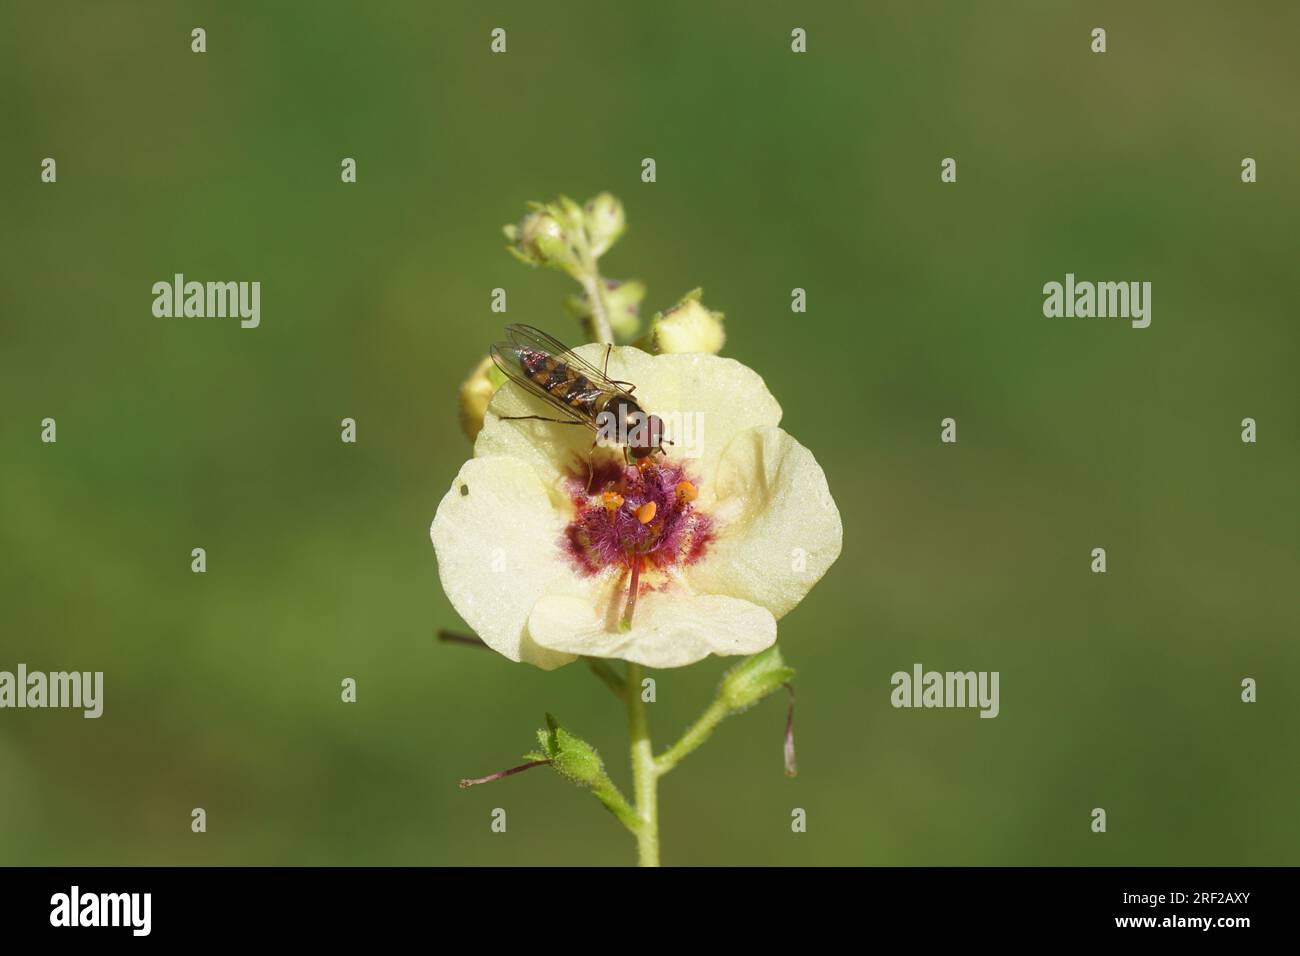 Male hoverfly Meliscaeva auricollis, family hoverflies (Syrphidae) on flower of mullein, Verbascum 'Dark Eyes', family Ranunculaceae. Summer, July, Stock Photo